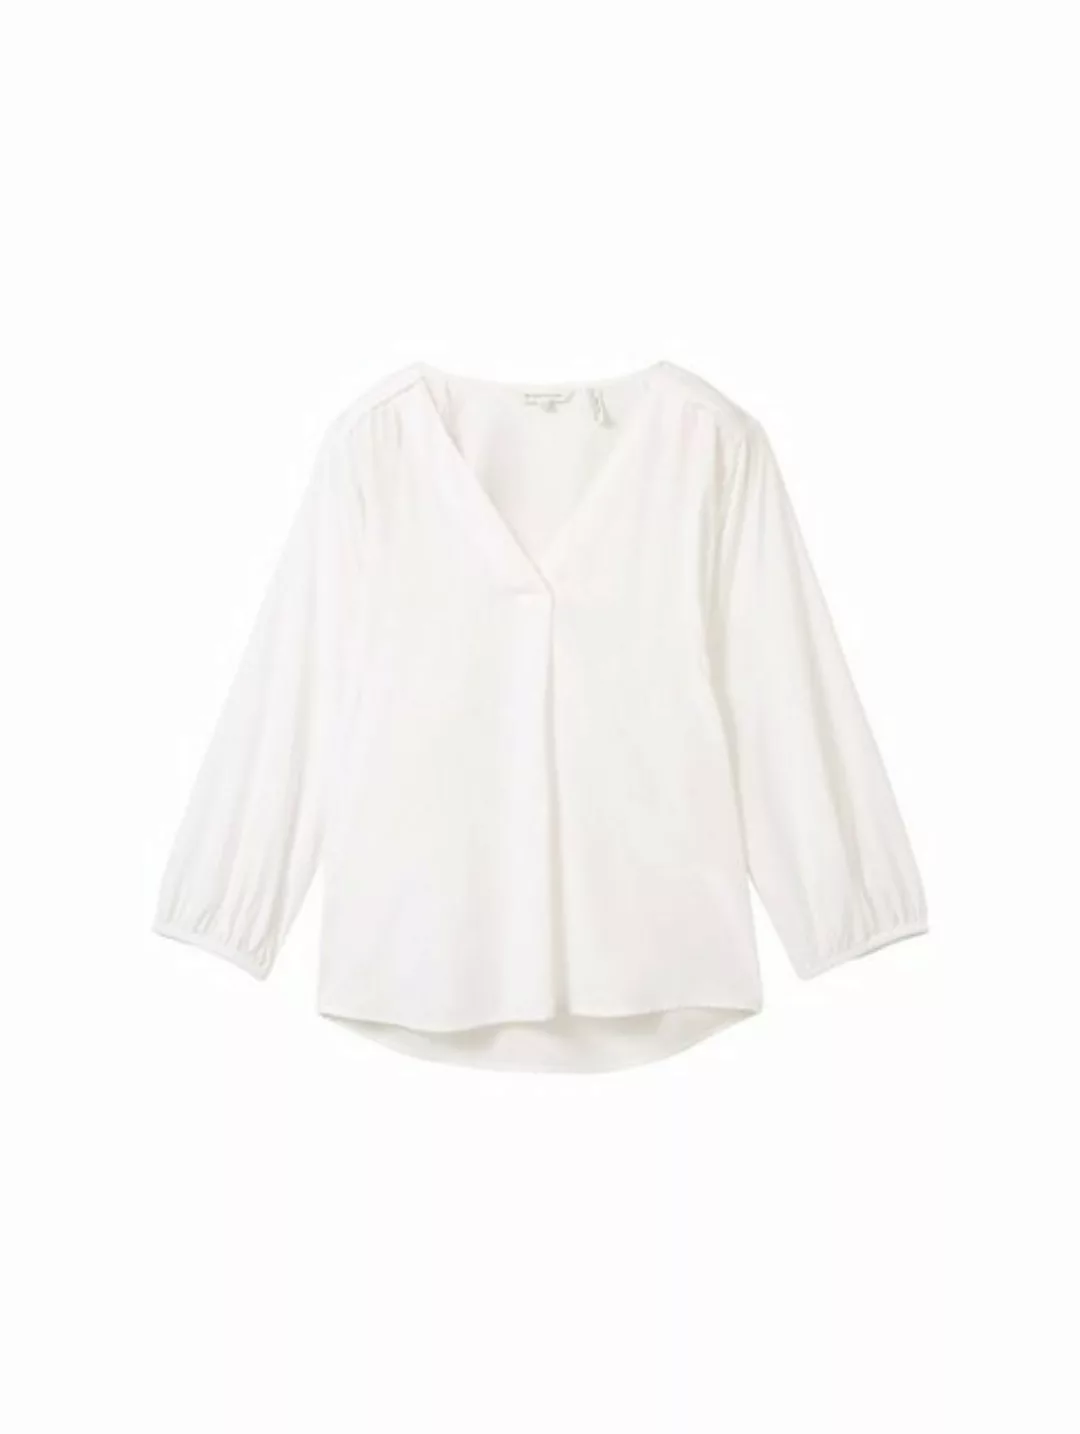 TOM TAILOR Blusenshirt v-neck blouse, White günstig online kaufen